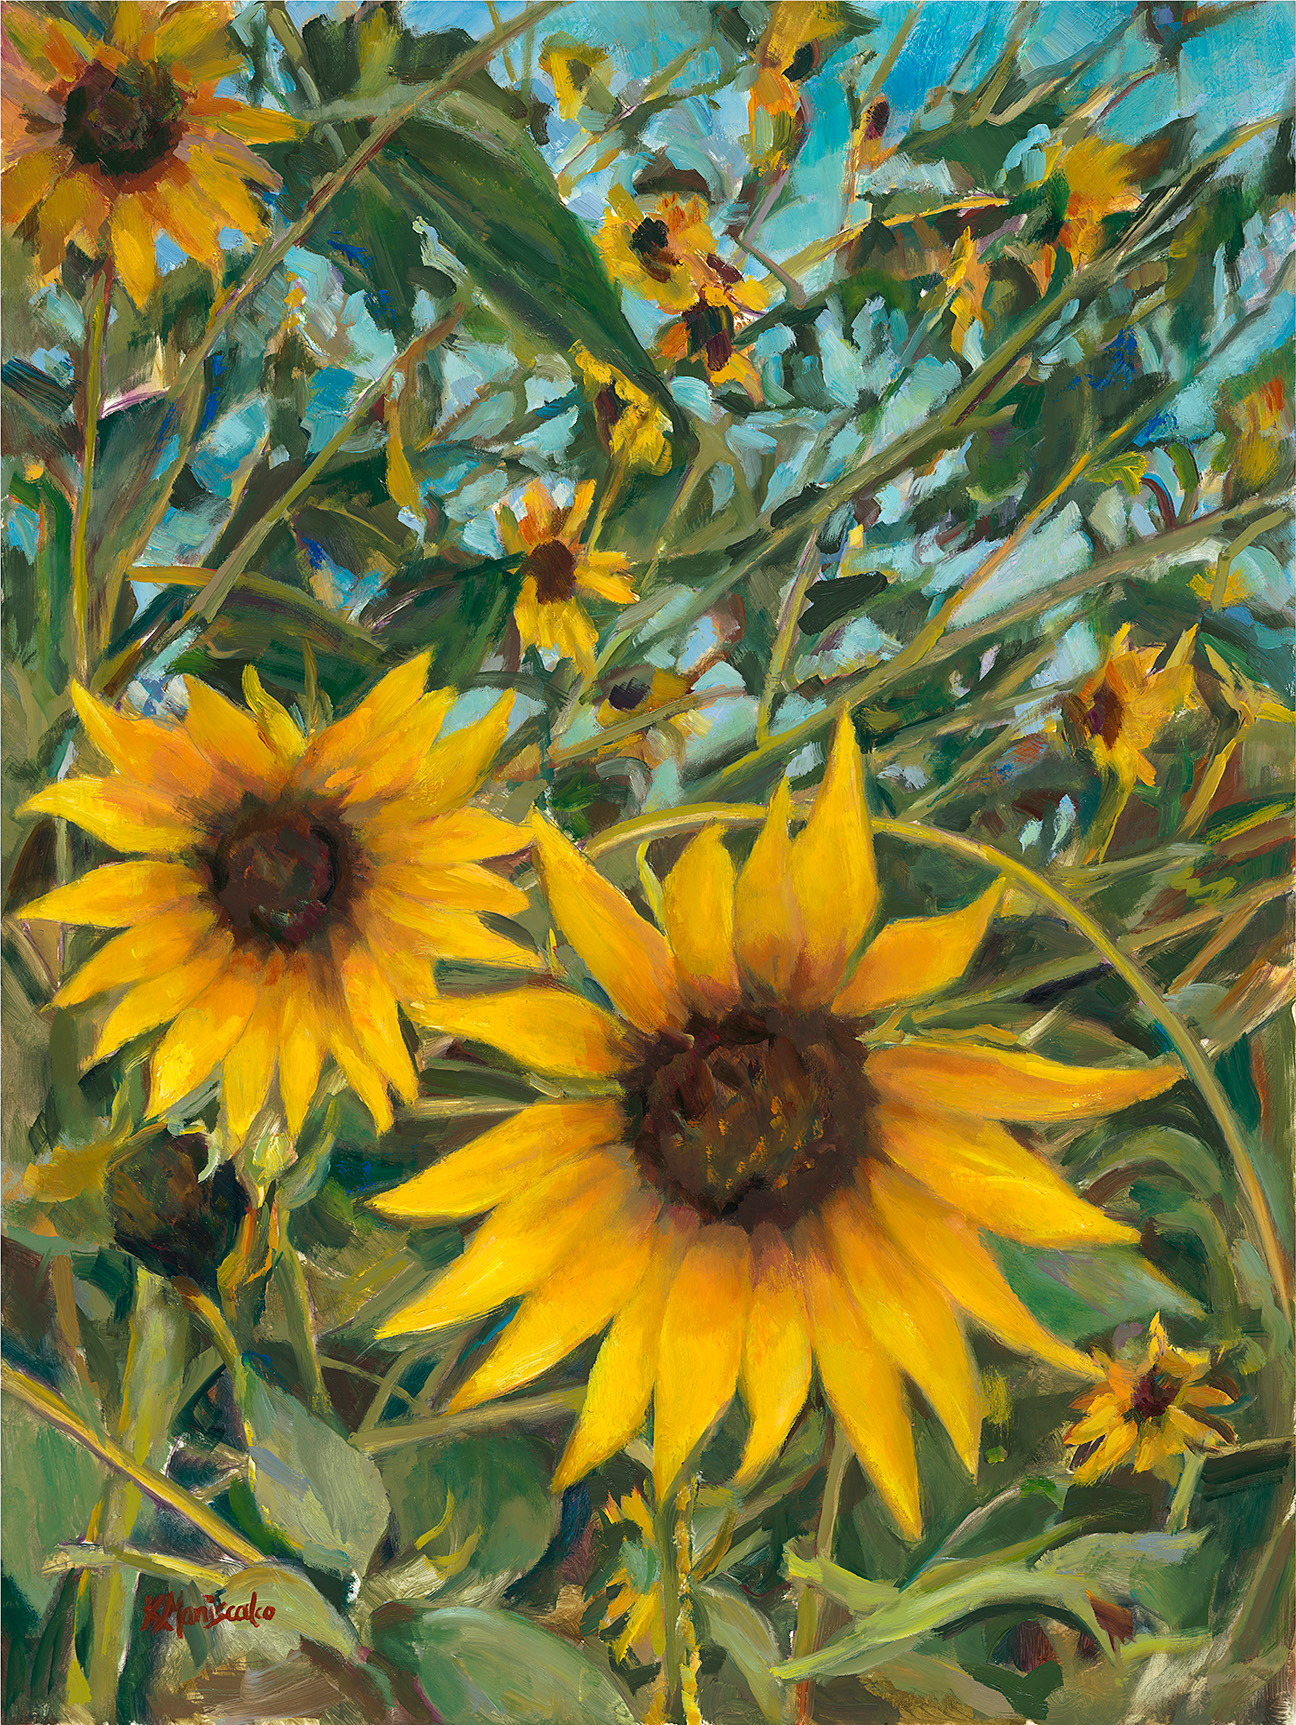 Santa fe sunflowers18x24 guunnk